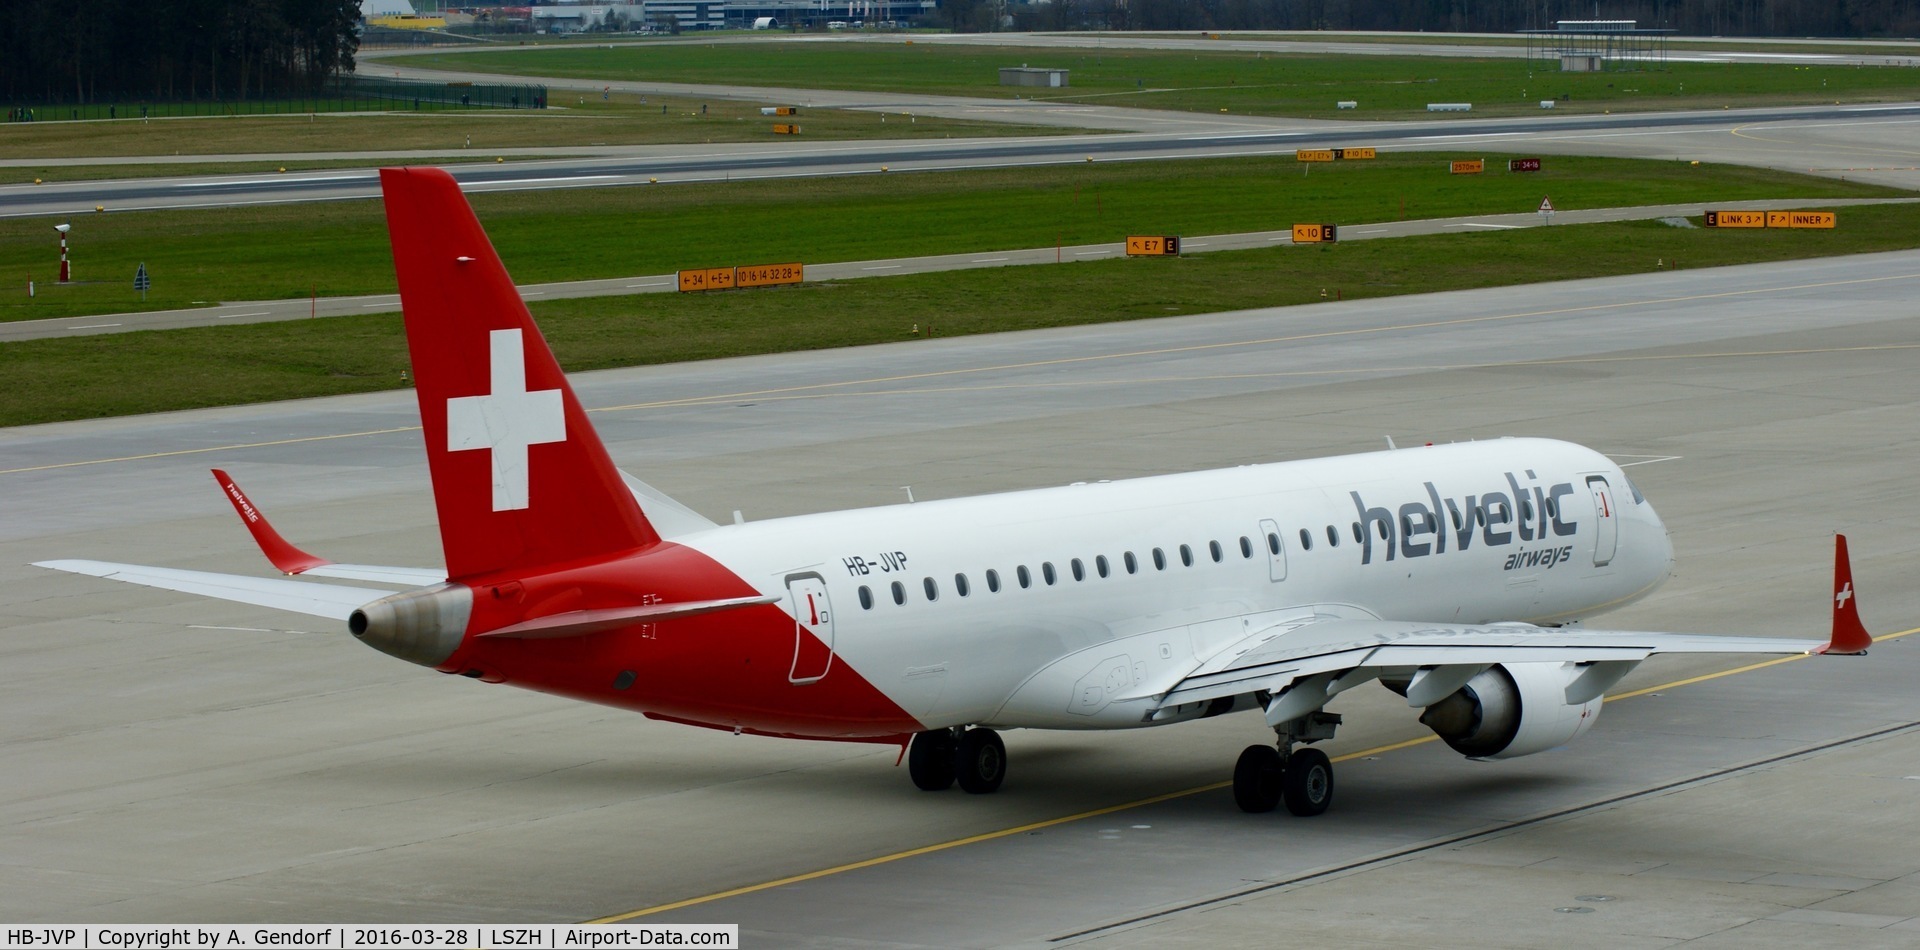 HB-JVP, 2010 Embraer 190LR (ERJ-190-100LR) C/N 19000387, Helvetic, is here taxiing at Zürich-Kloten(LSZH)